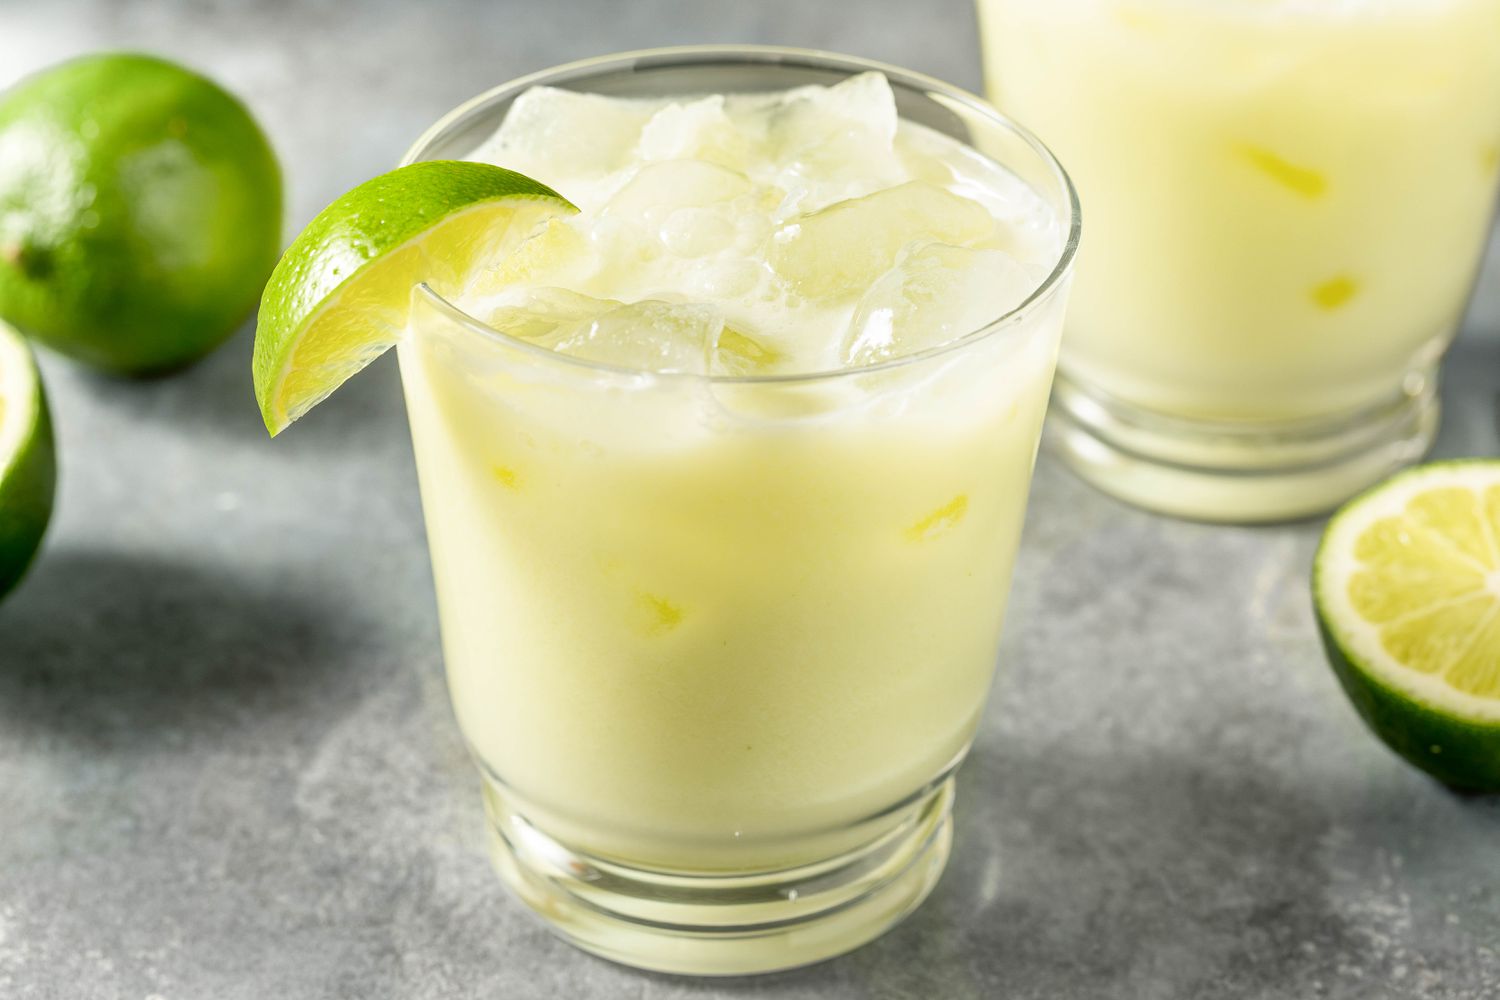 Homemade Sweet Refreshing Brazilian Lemonade with LImes and Sugar